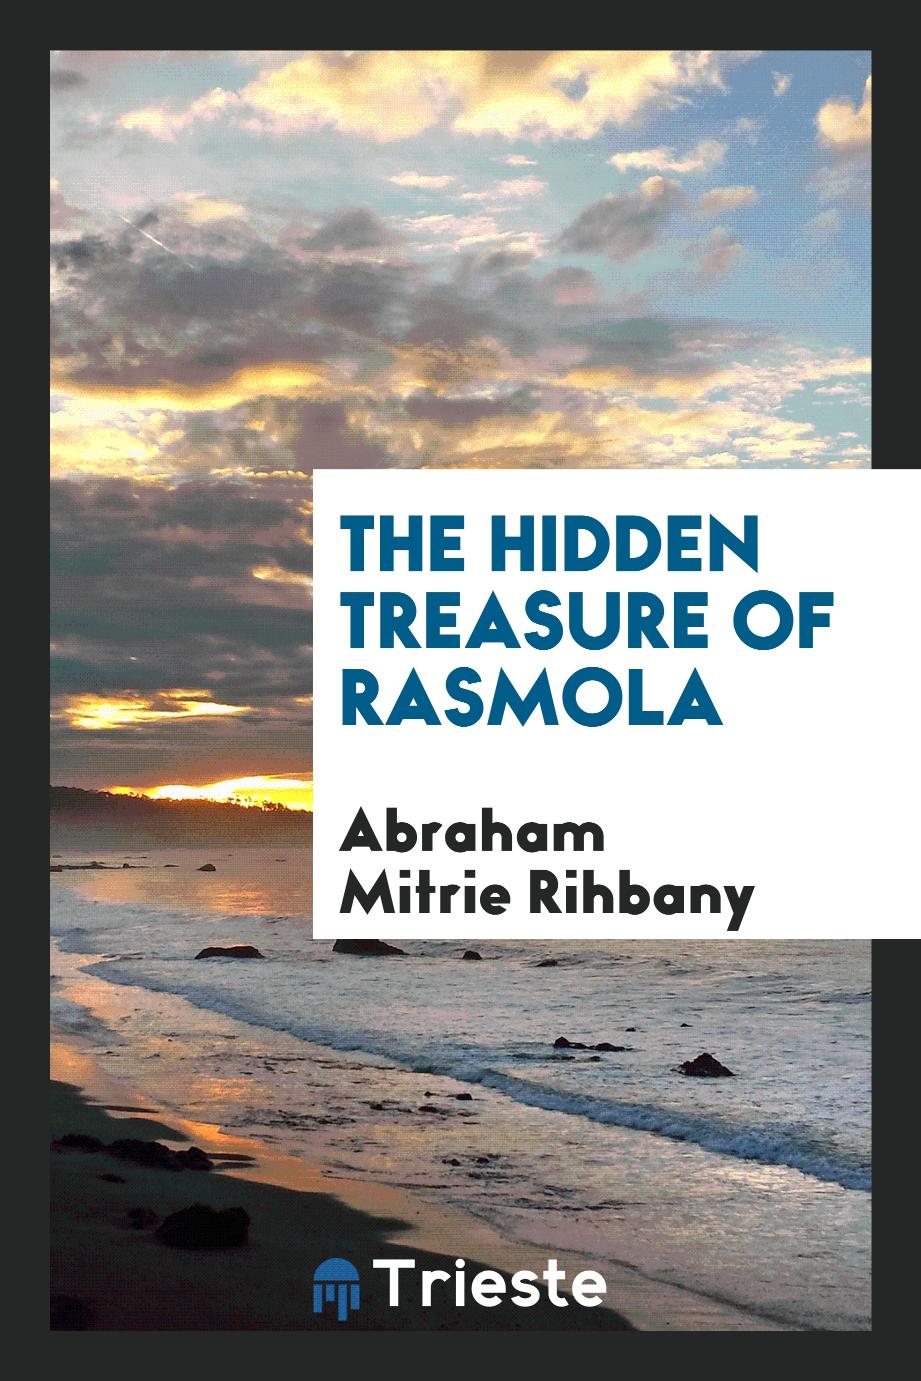 The Hidden Treasure of Rasmola